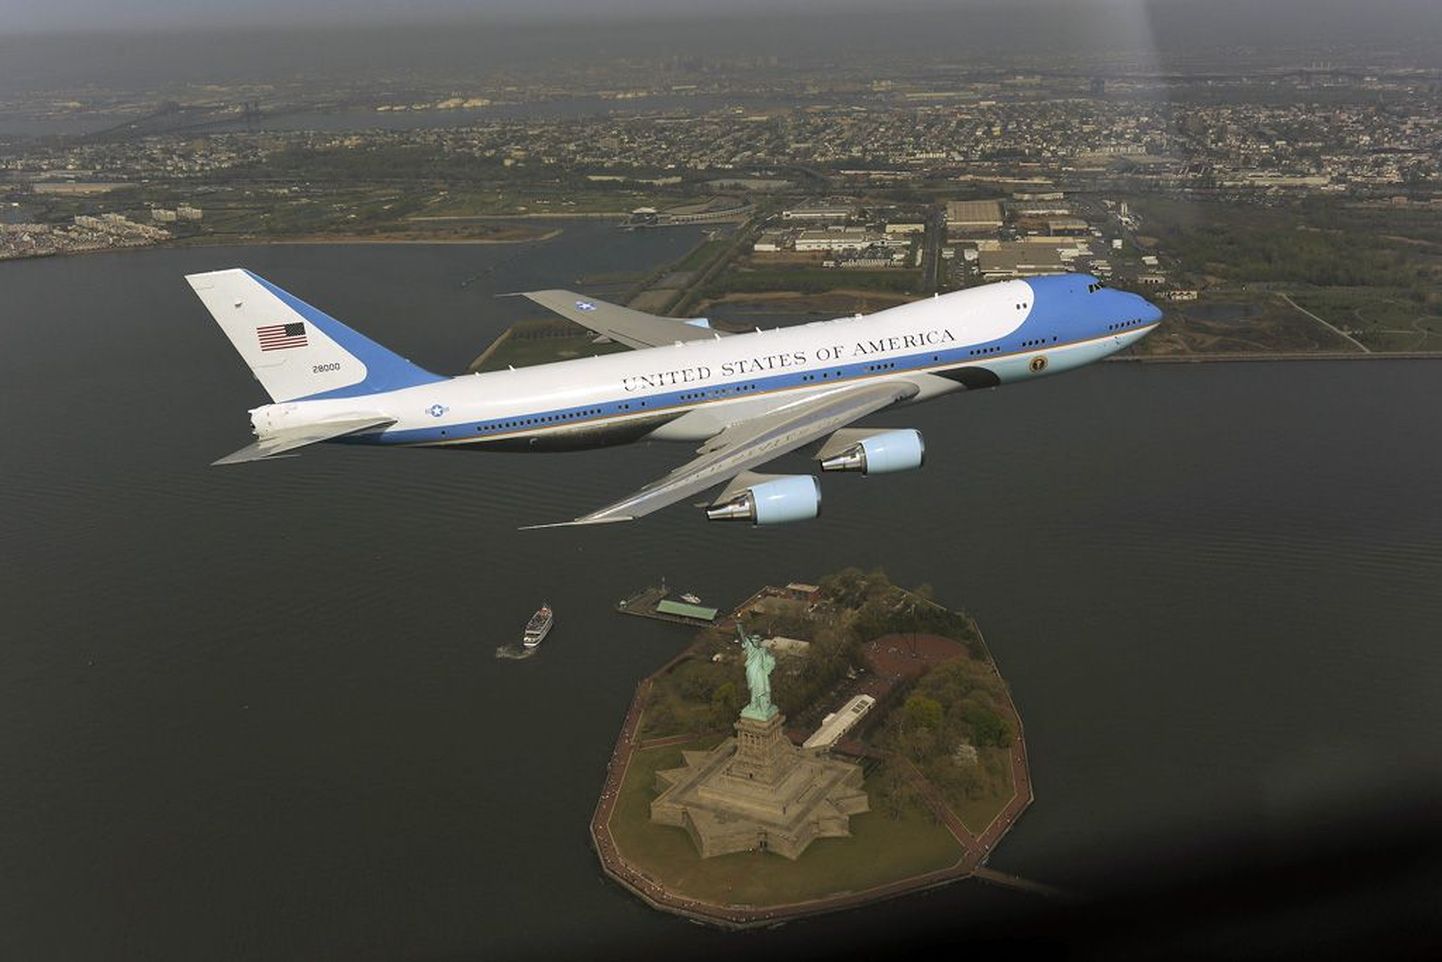 USA presidendi lennuk Air Force One kõrgel New Yorgi Vabadussamba kohal.